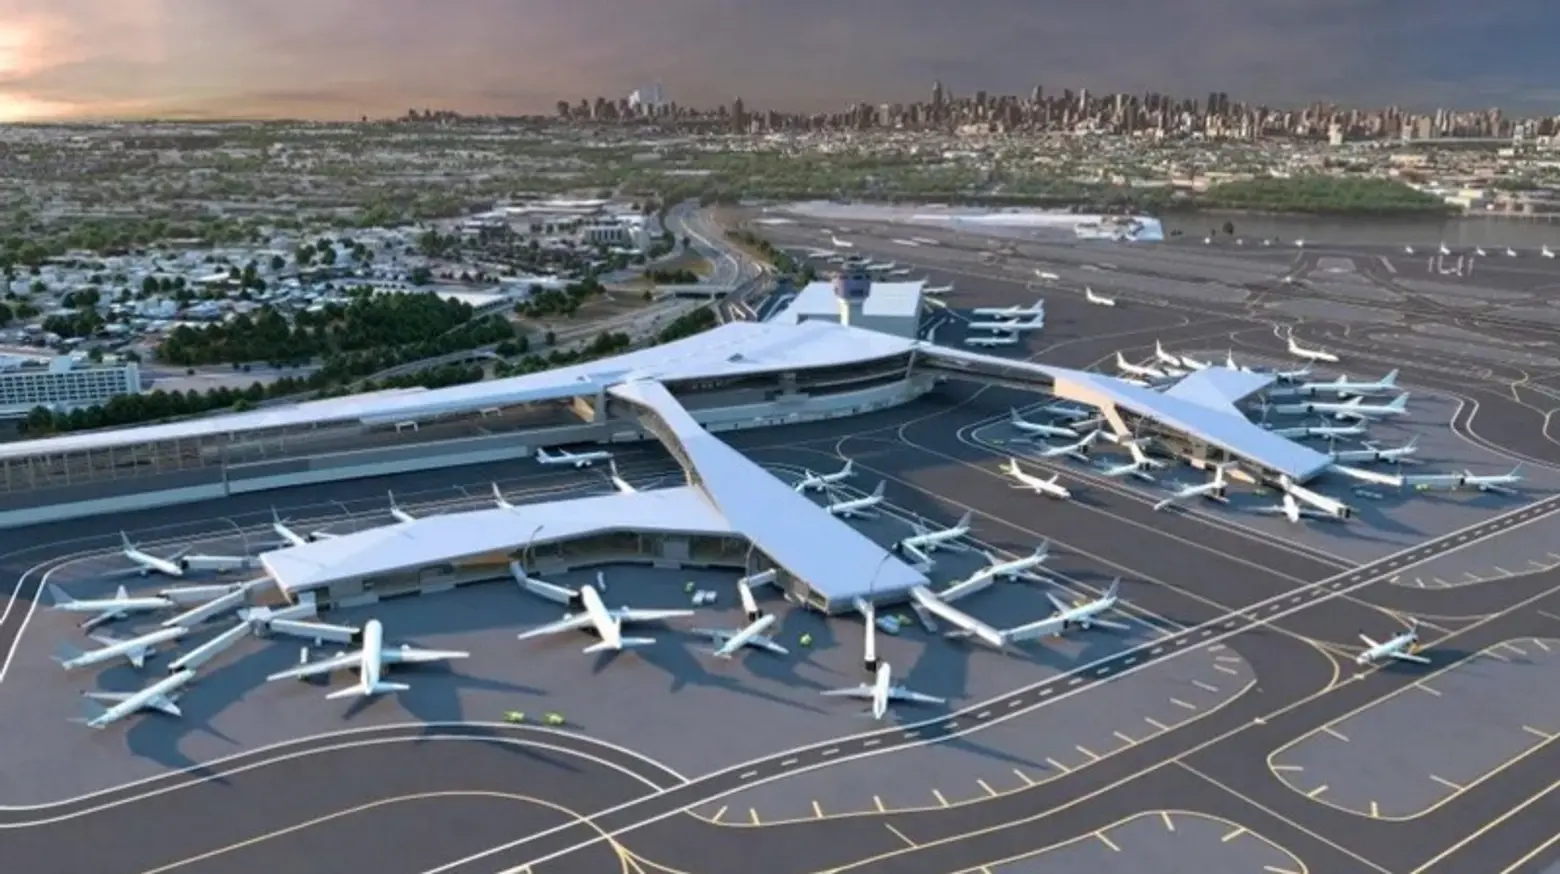 $4B Overhaul of LaGuardia Airport to Begin This Summer, New Renderings